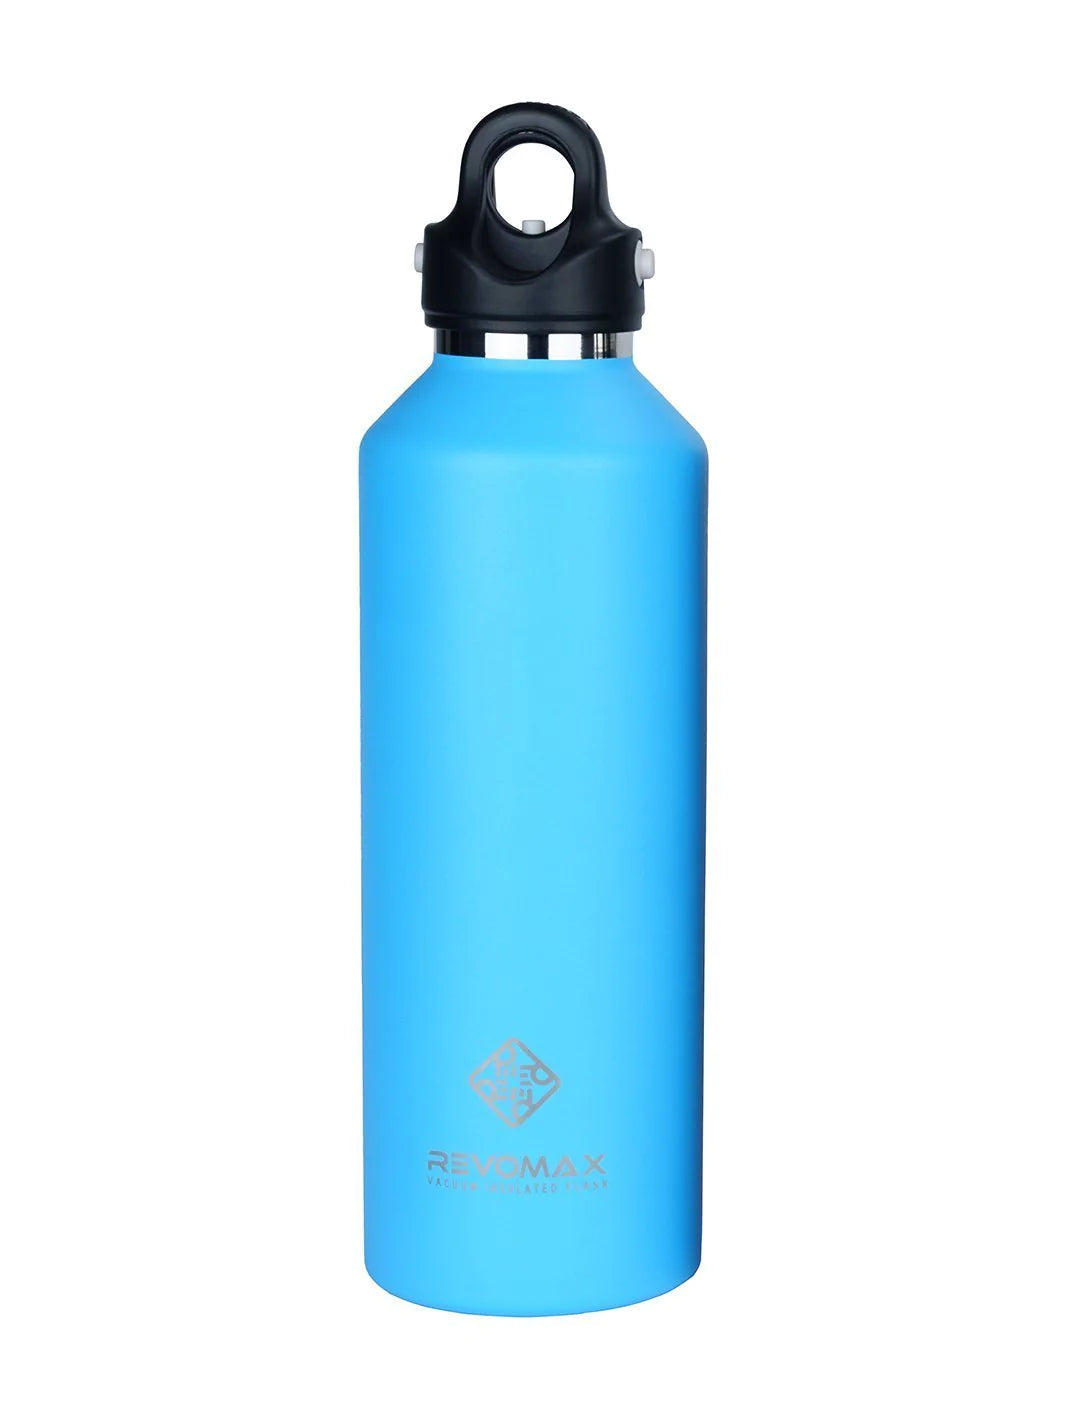 Revomax Vacuum Insulated Flask - 950ml / 32oz